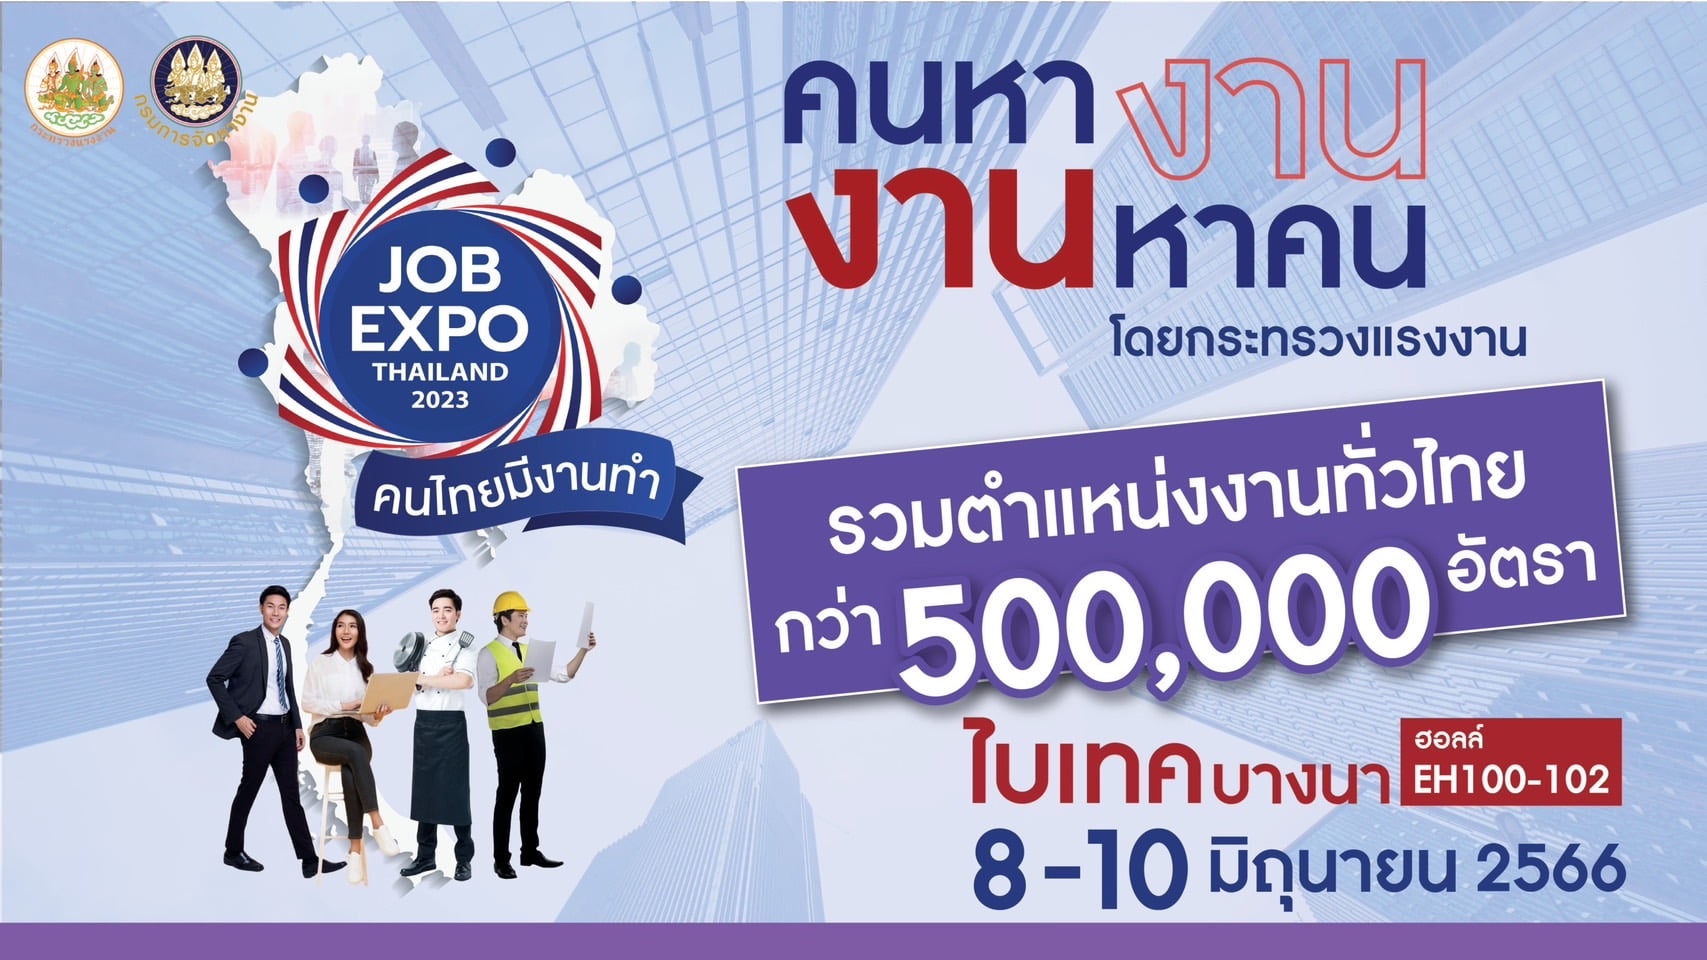 JOB EXPO THAILAND 2023 (In Bangkok June 8-10, 2023)